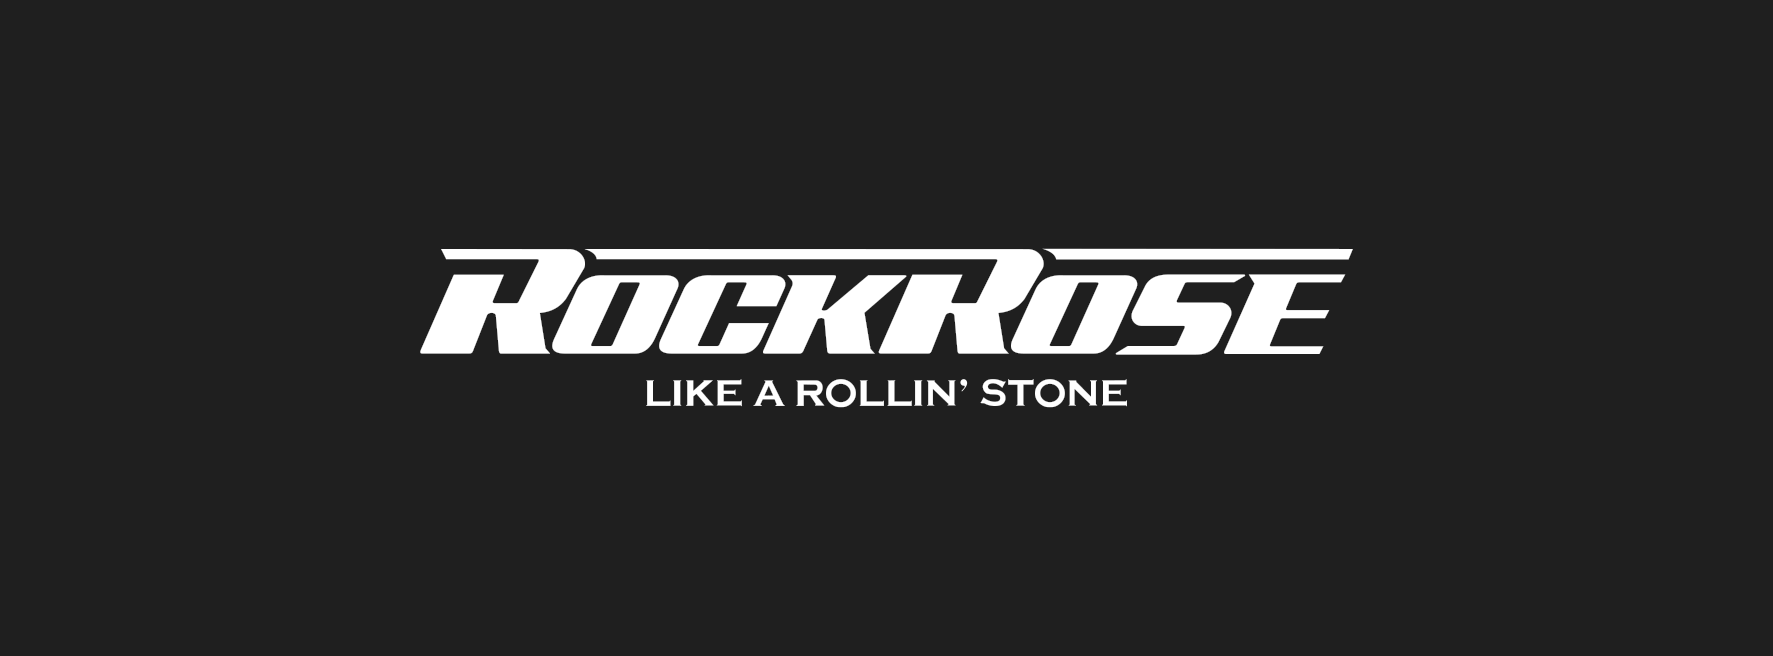 RockRose Products